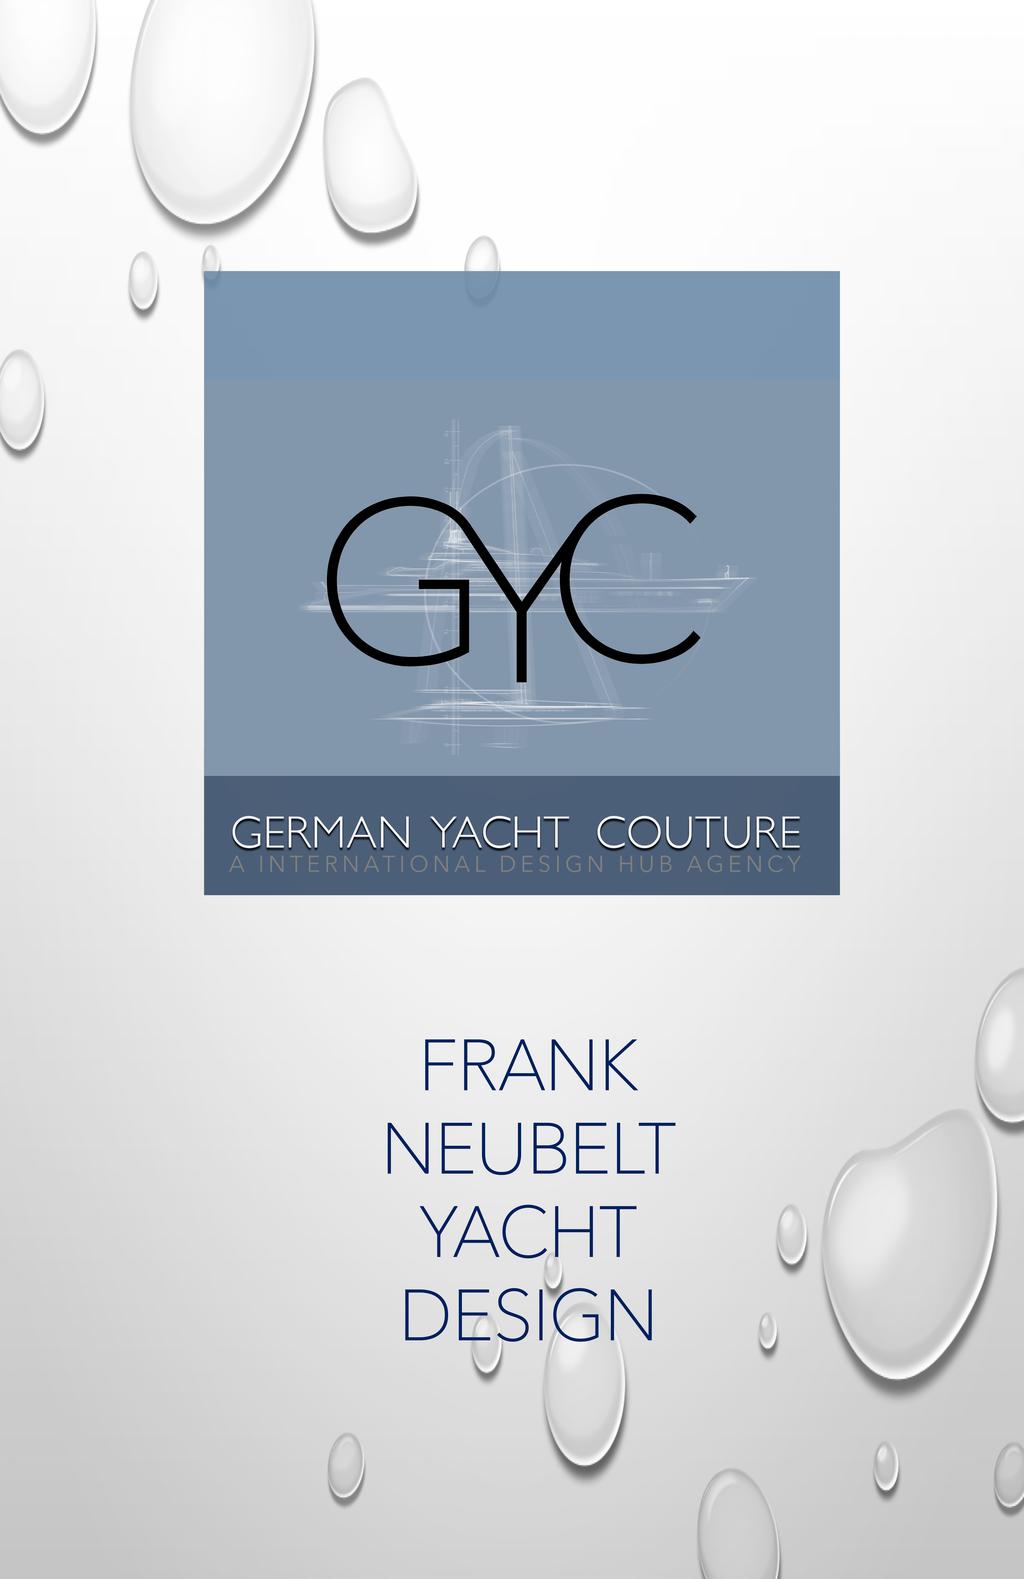 Contact Information German Yacht Couture by Frank Neubelt Yacht Design M: +49 170 781 6335 g.yc@aol.com www.gycstudio.